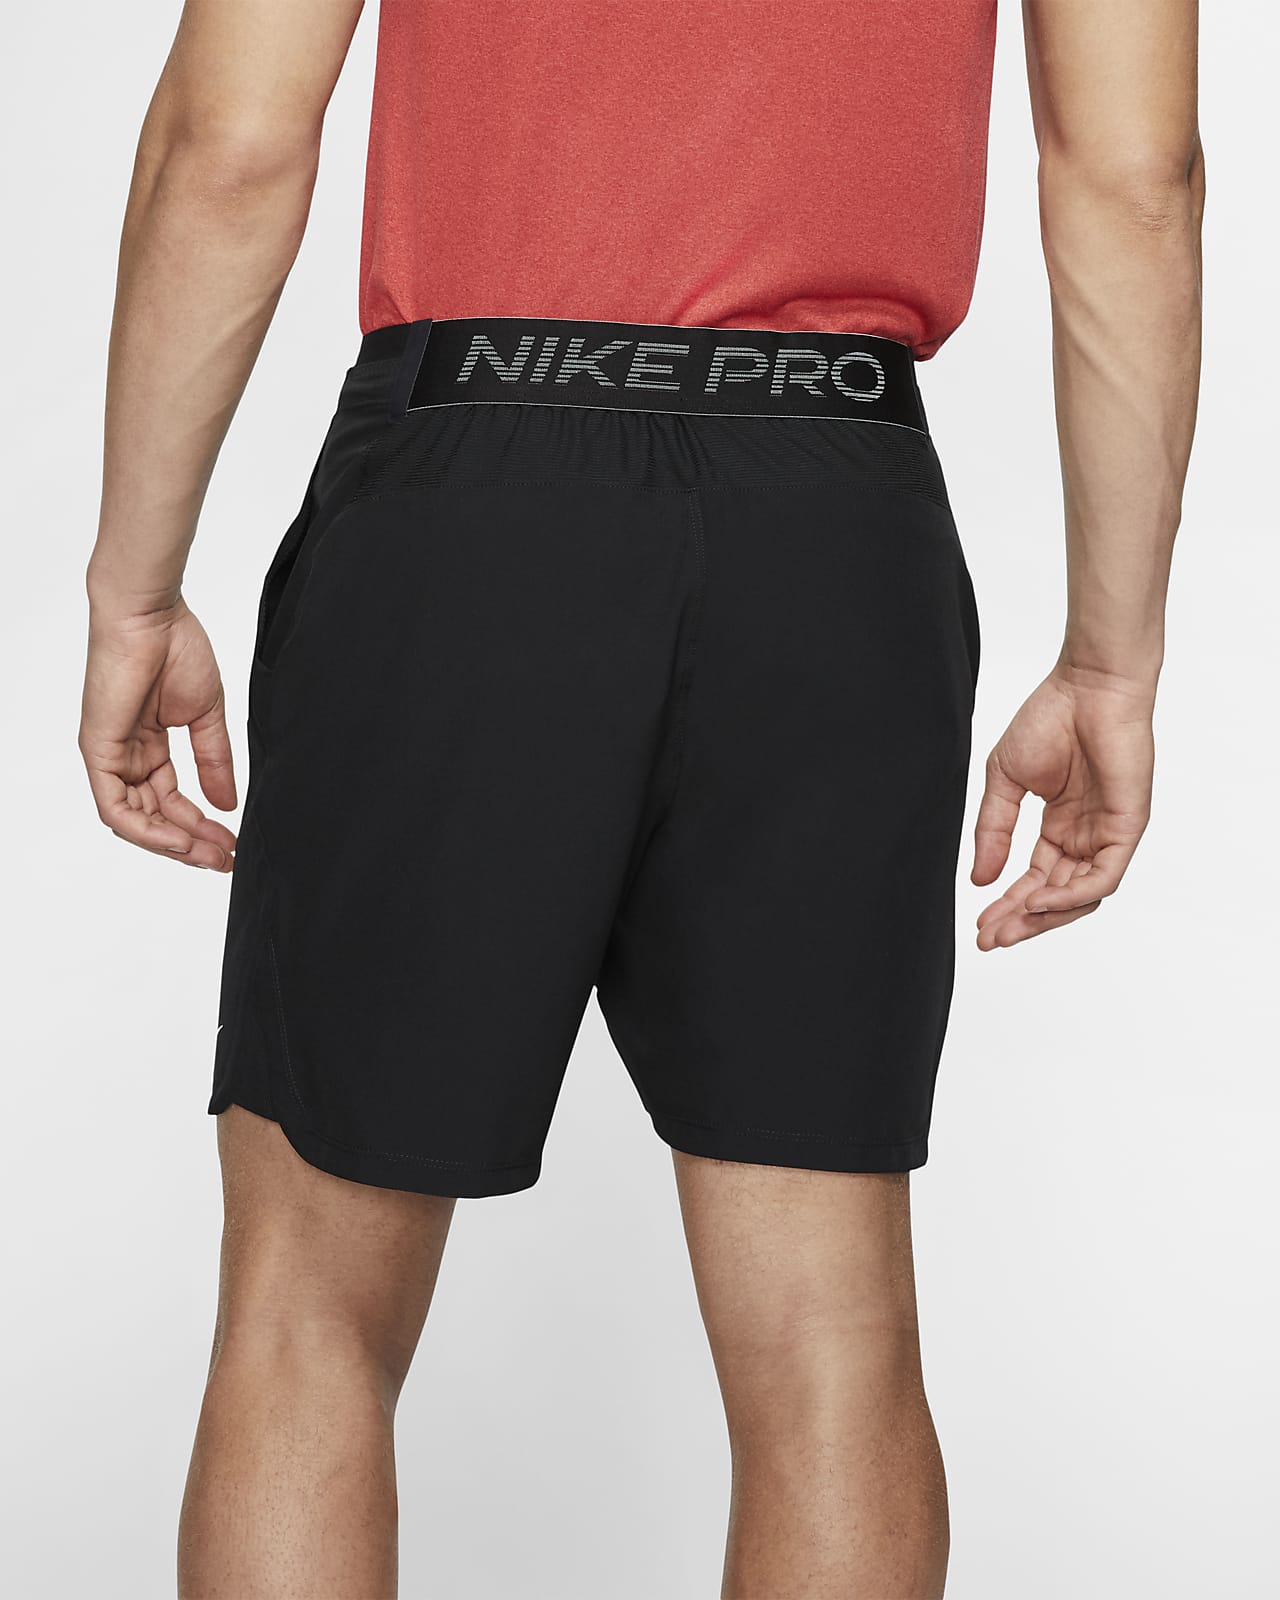 nike pro training shorts mens